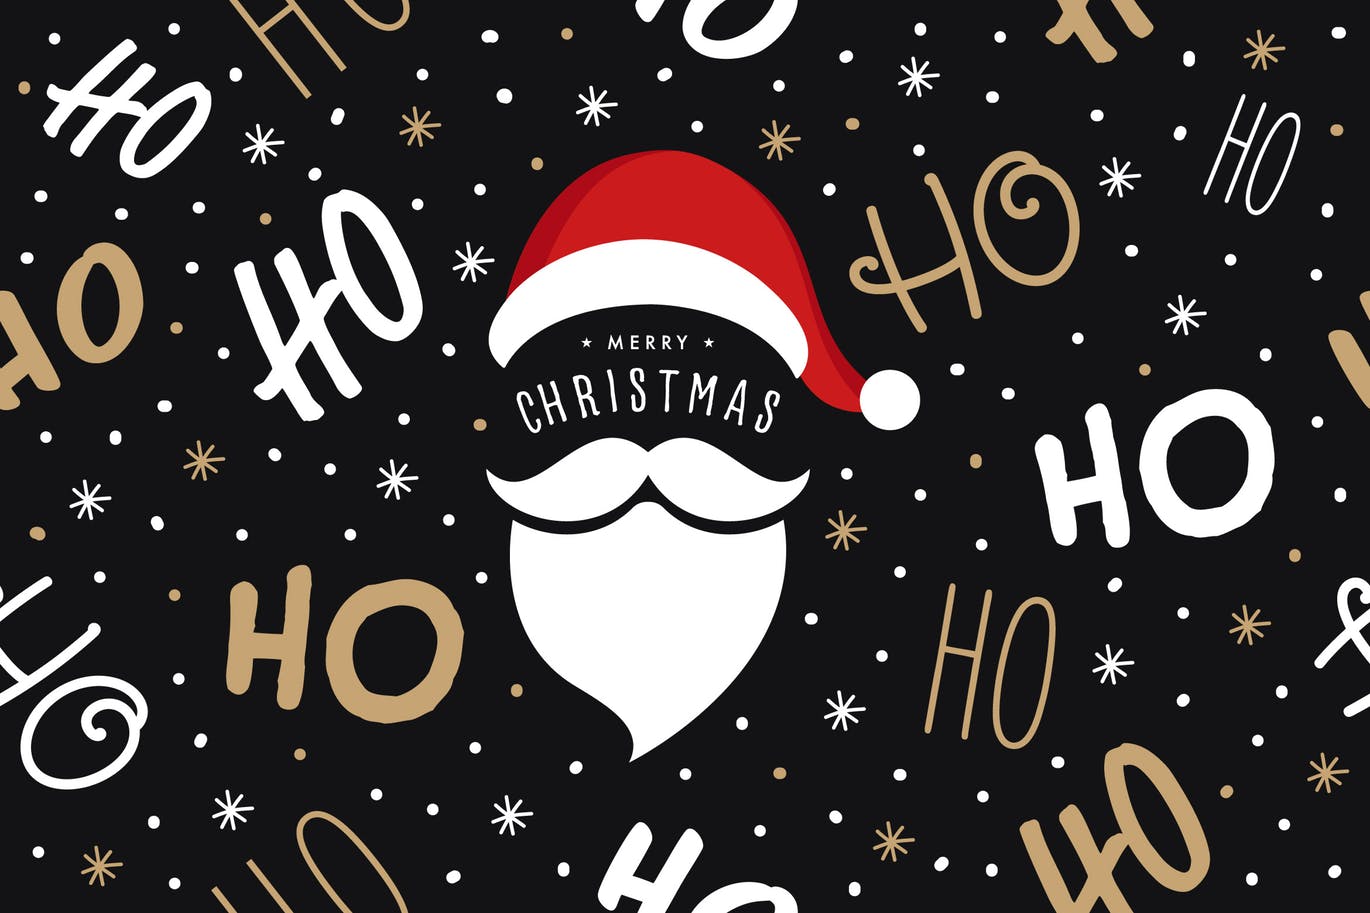 圣诞节节日元素无缝贴图设计素材 Ho ho ho santa claus laugh hat and beard pattern插图